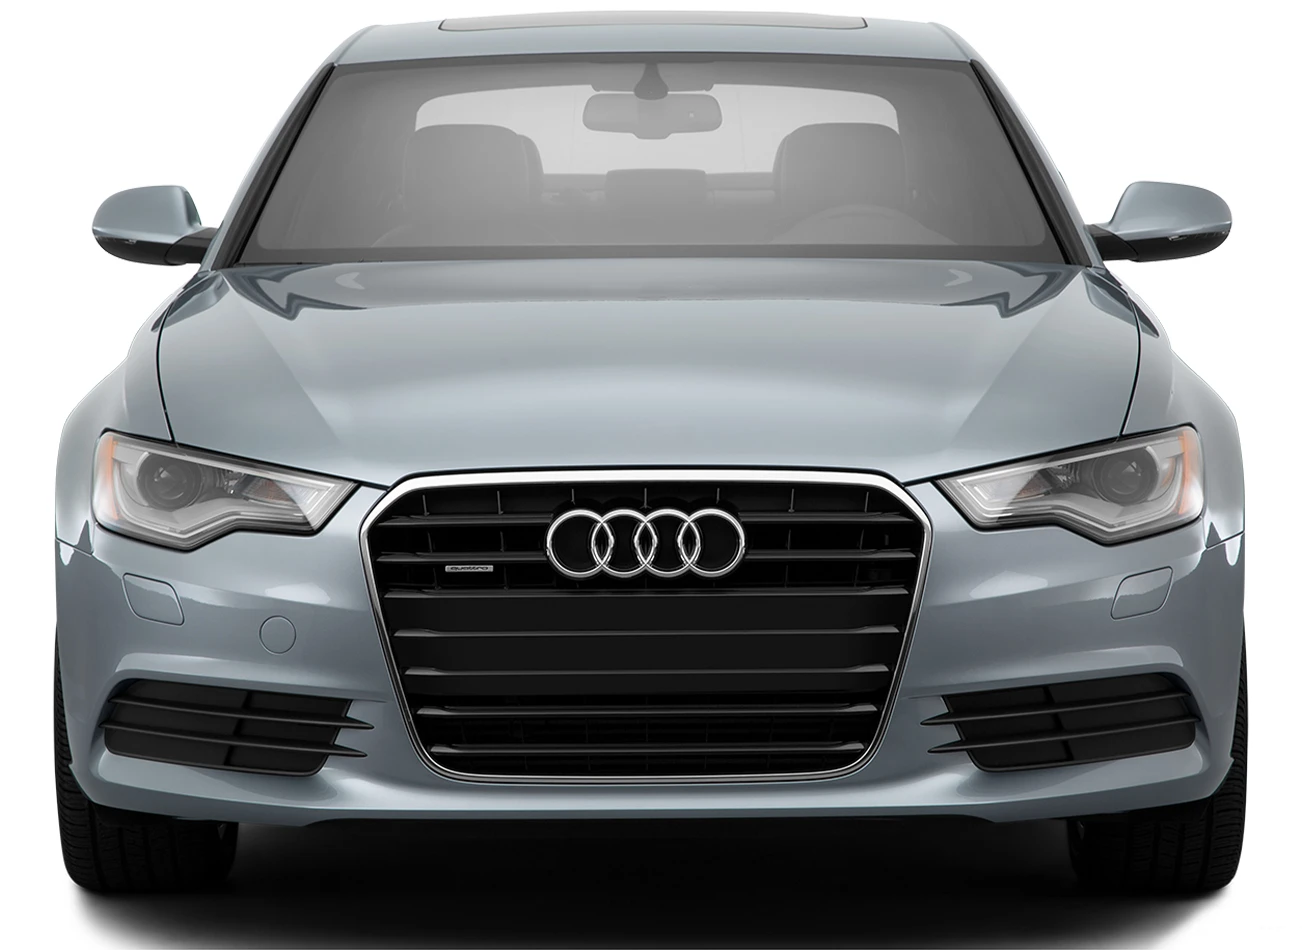 2015 Audi A6 Review: Exterior Front View | CarMax